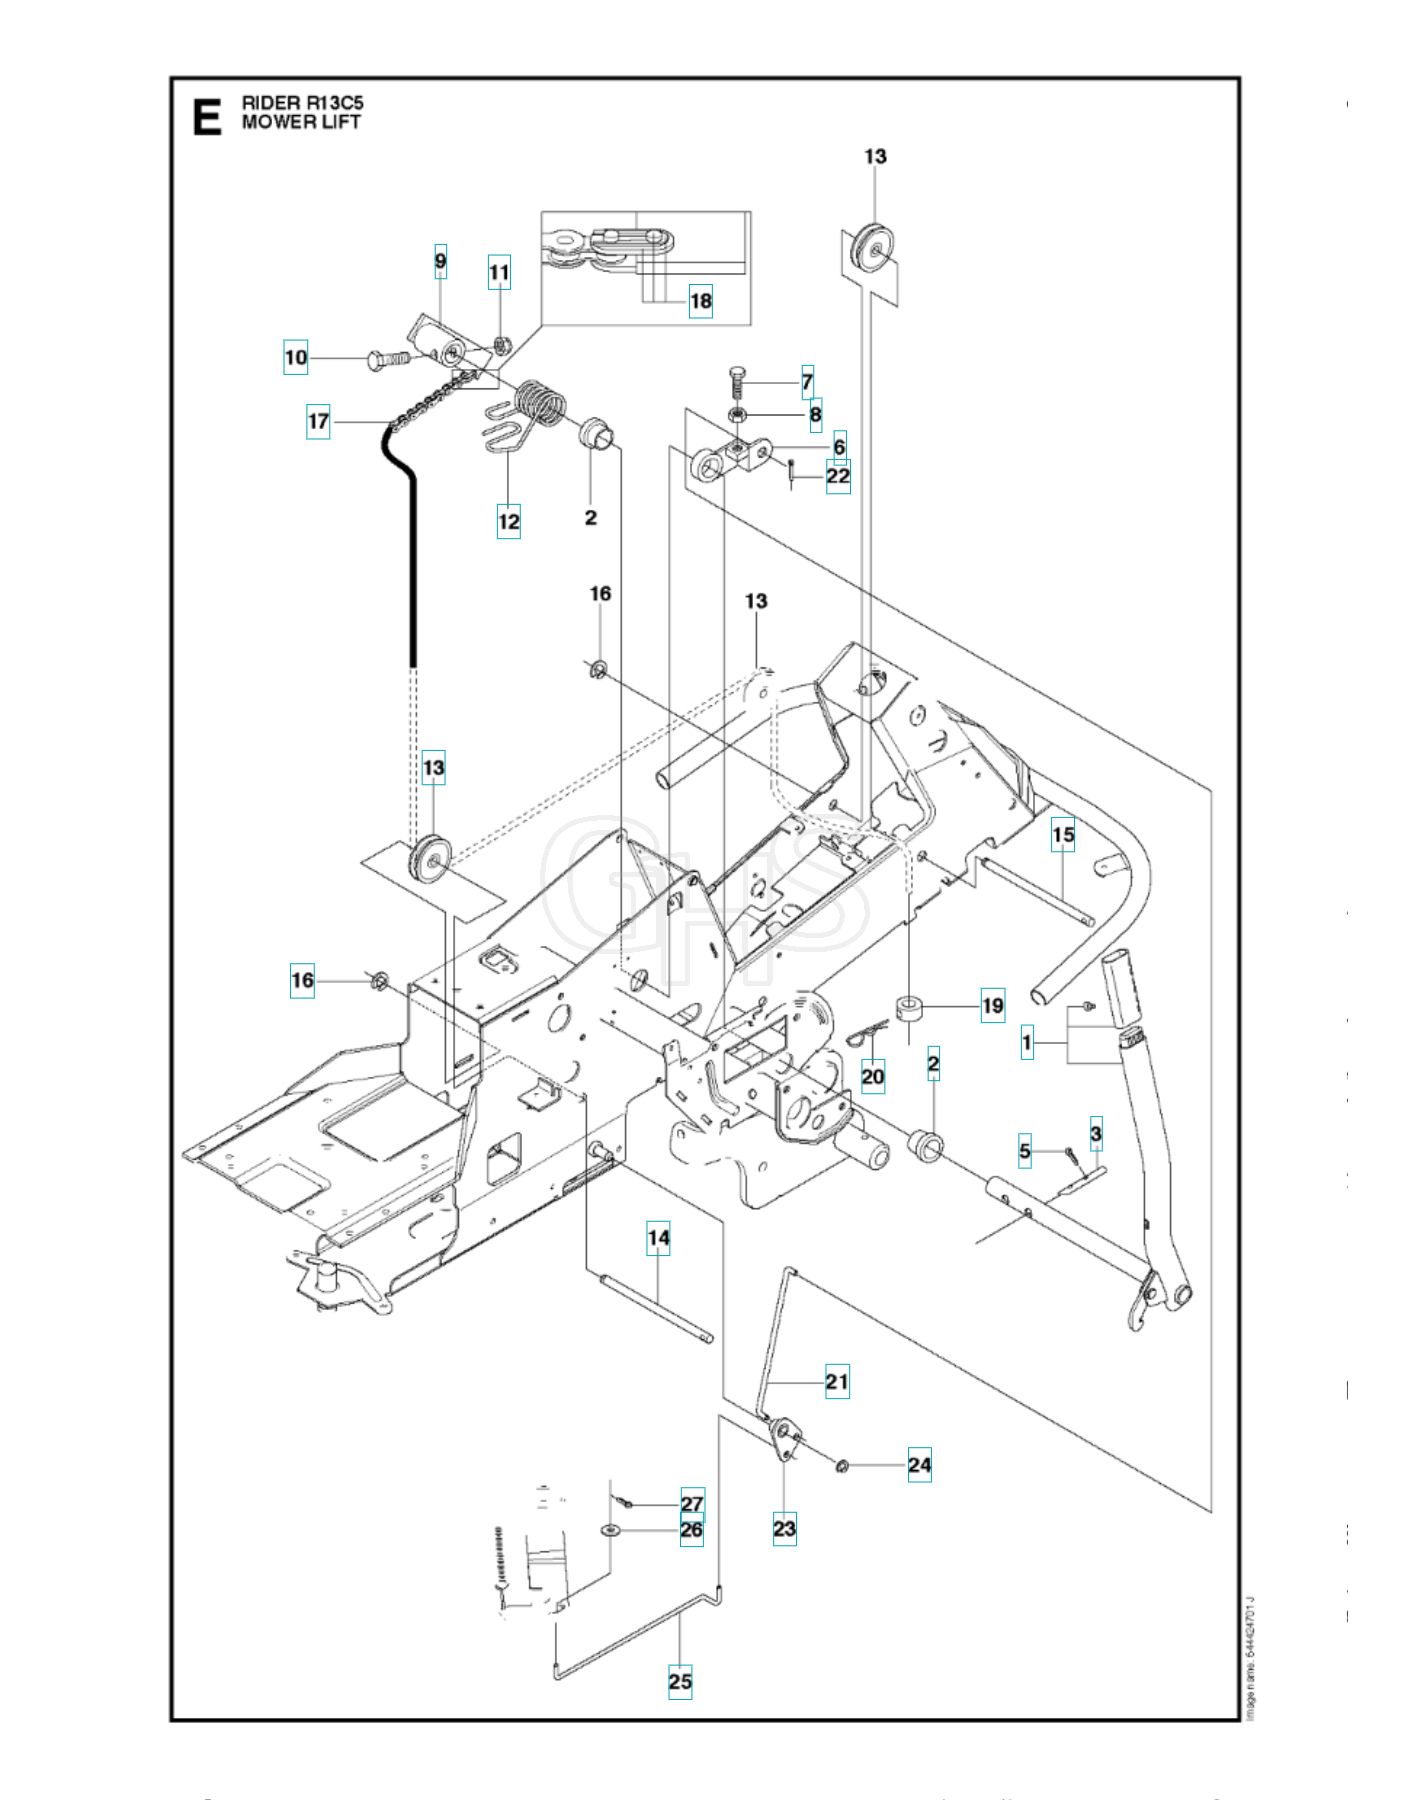 Husqvarna R13 C5 - Mower Lift & Deck Lift | GHS